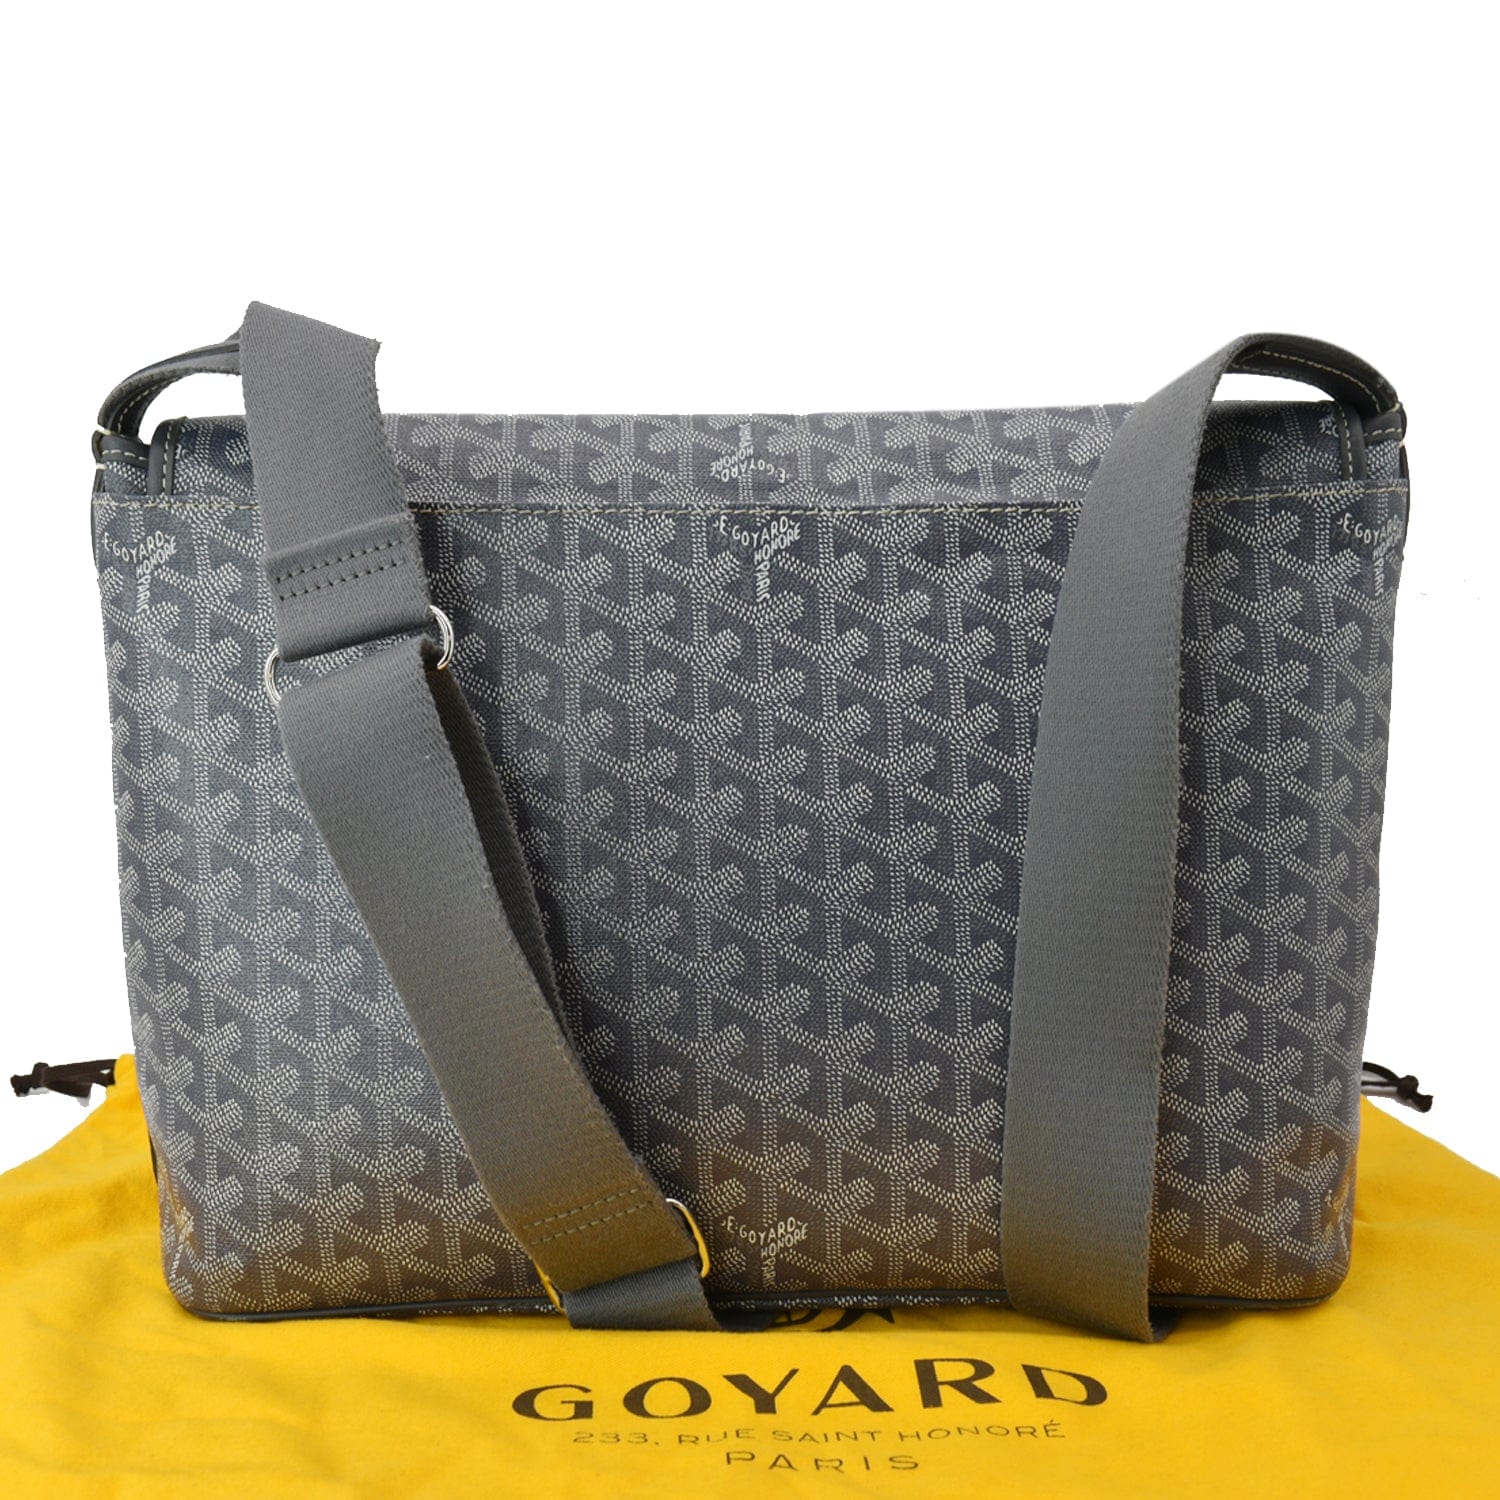 Goyard, Goyard bag, Handbags for men